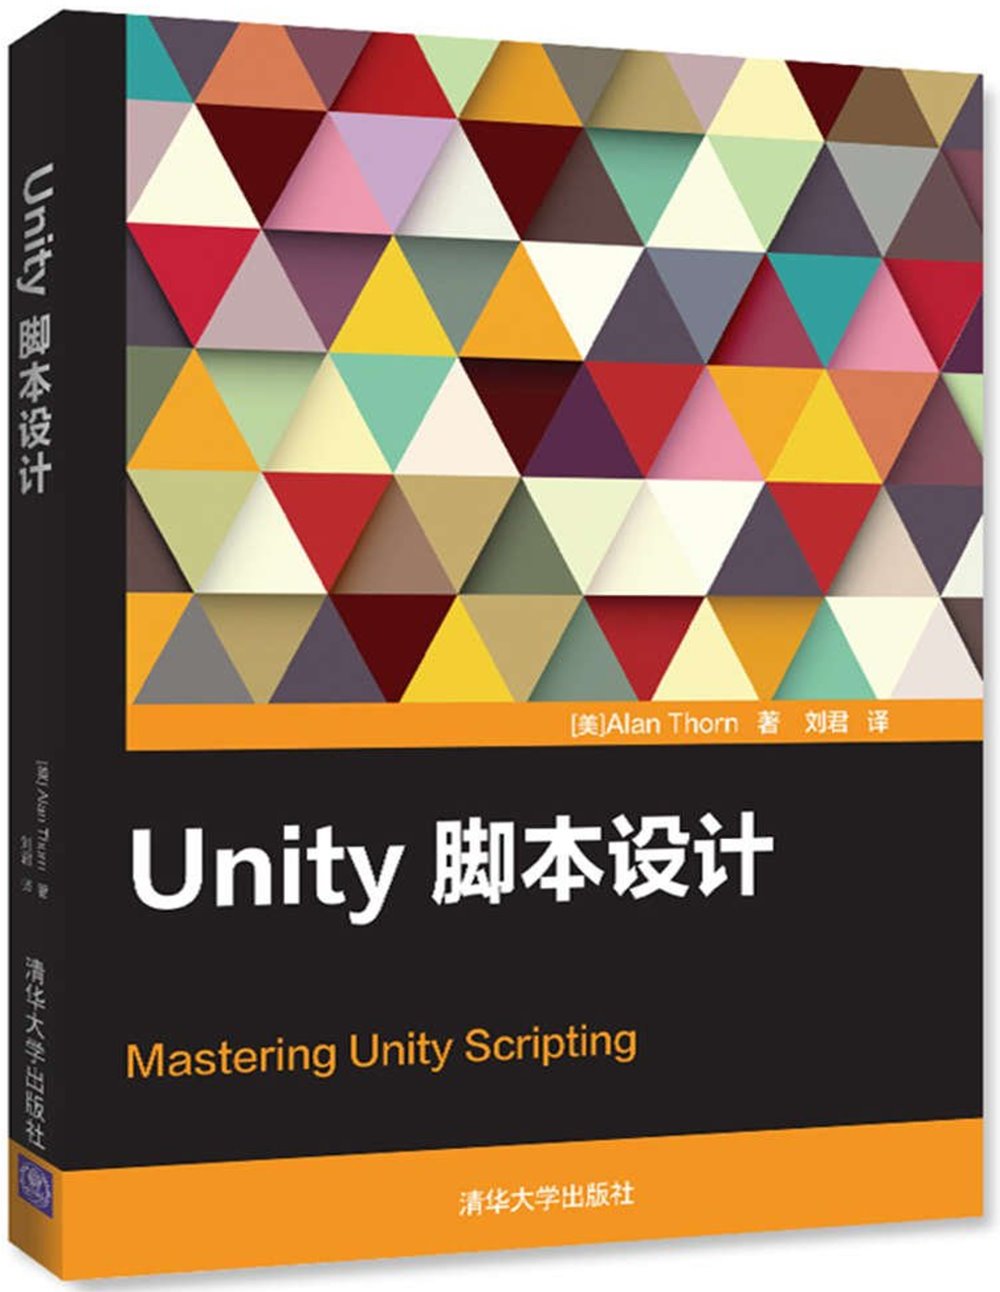 Unity腳本設計